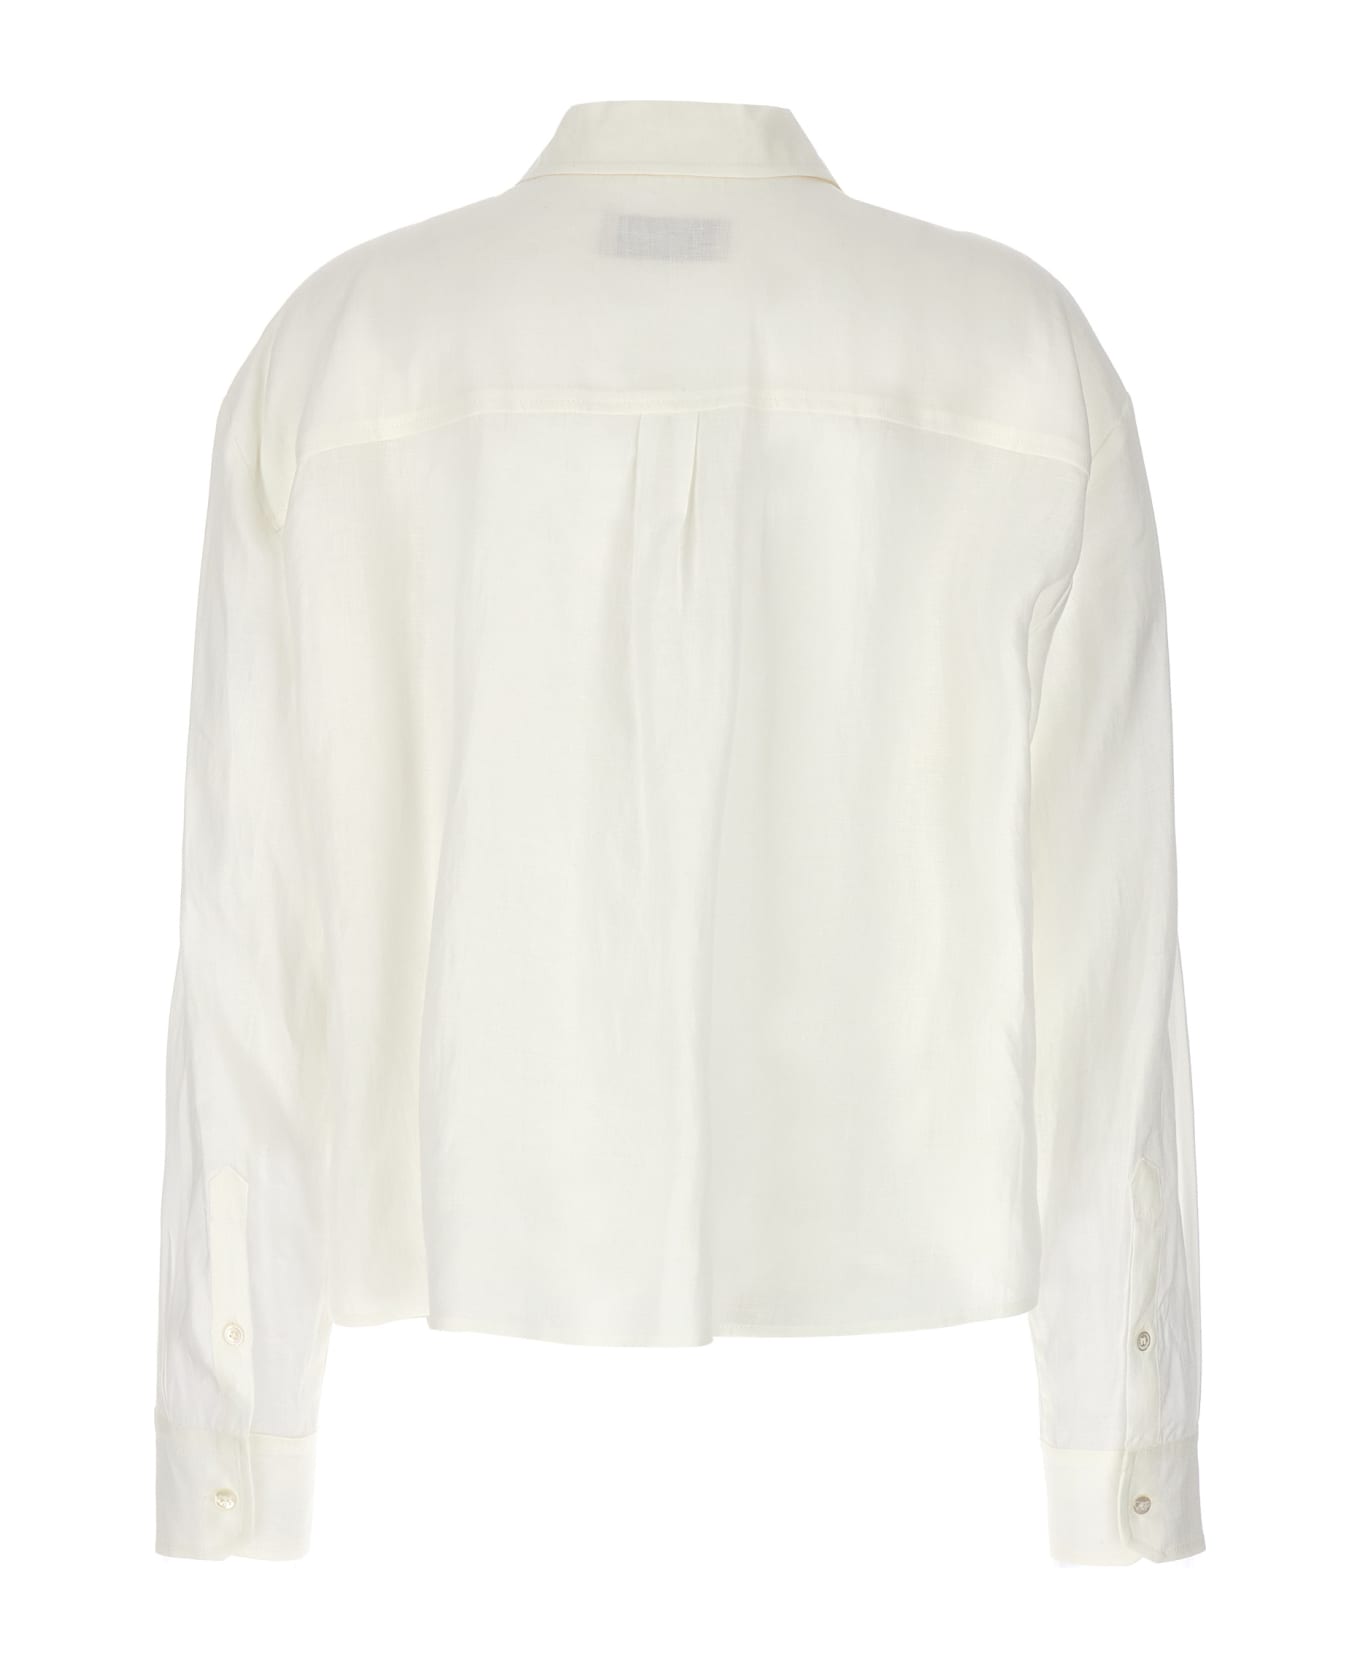 Weekend Max Mara 'eureka' Shirt - White シャツ